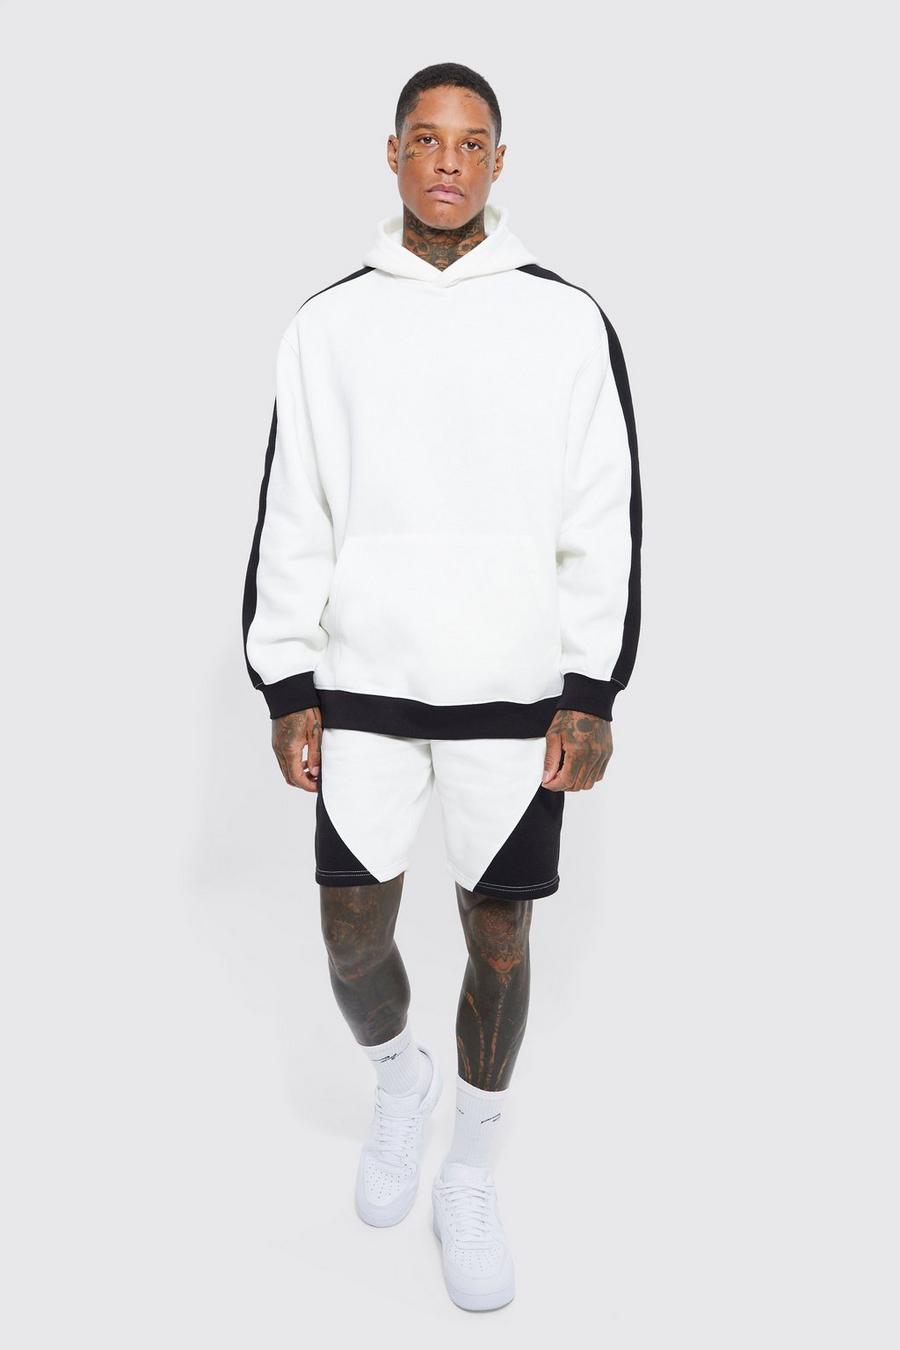 Kurzer Oversize Colorblock Trainingsanzug mit Kapuze, Ecru weiß